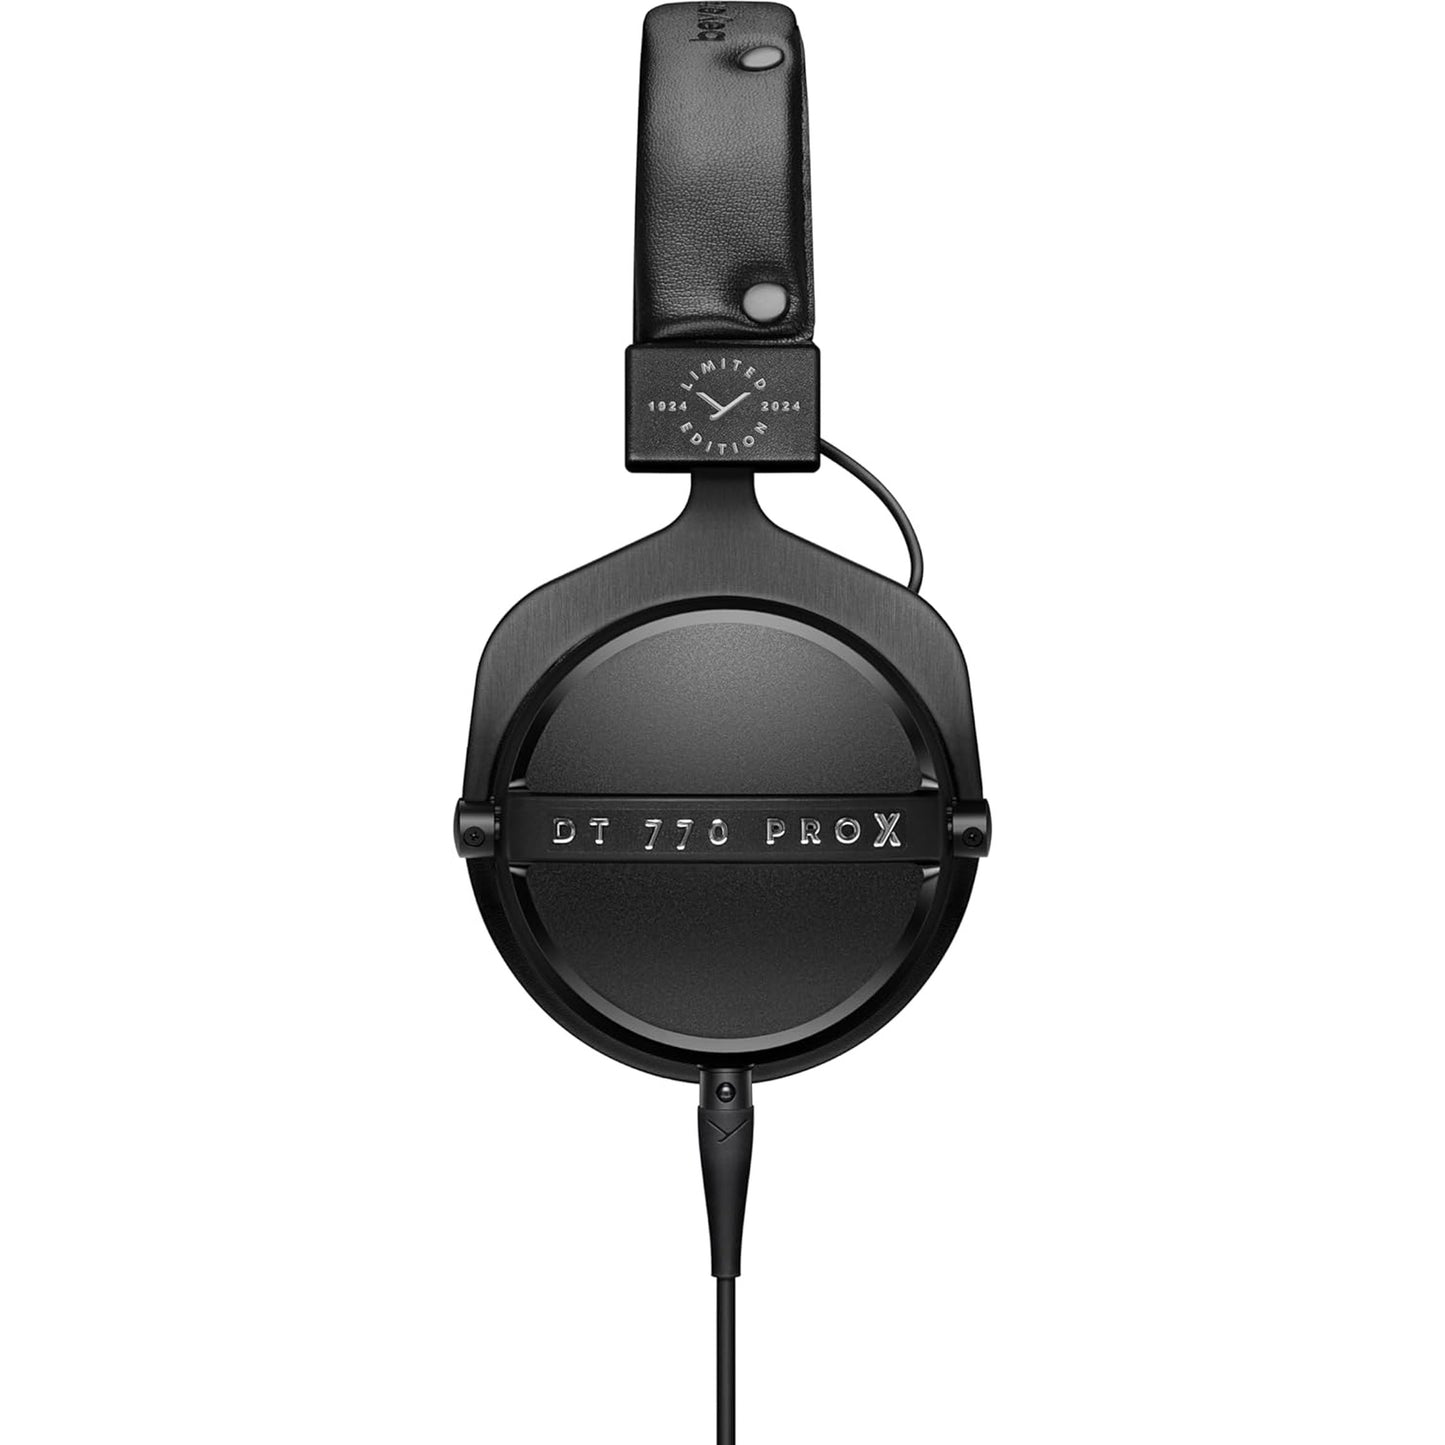 Beyerdynamic DT 770 Pro X Limited Edition 48 ohm Closed-Back Studio Headphones